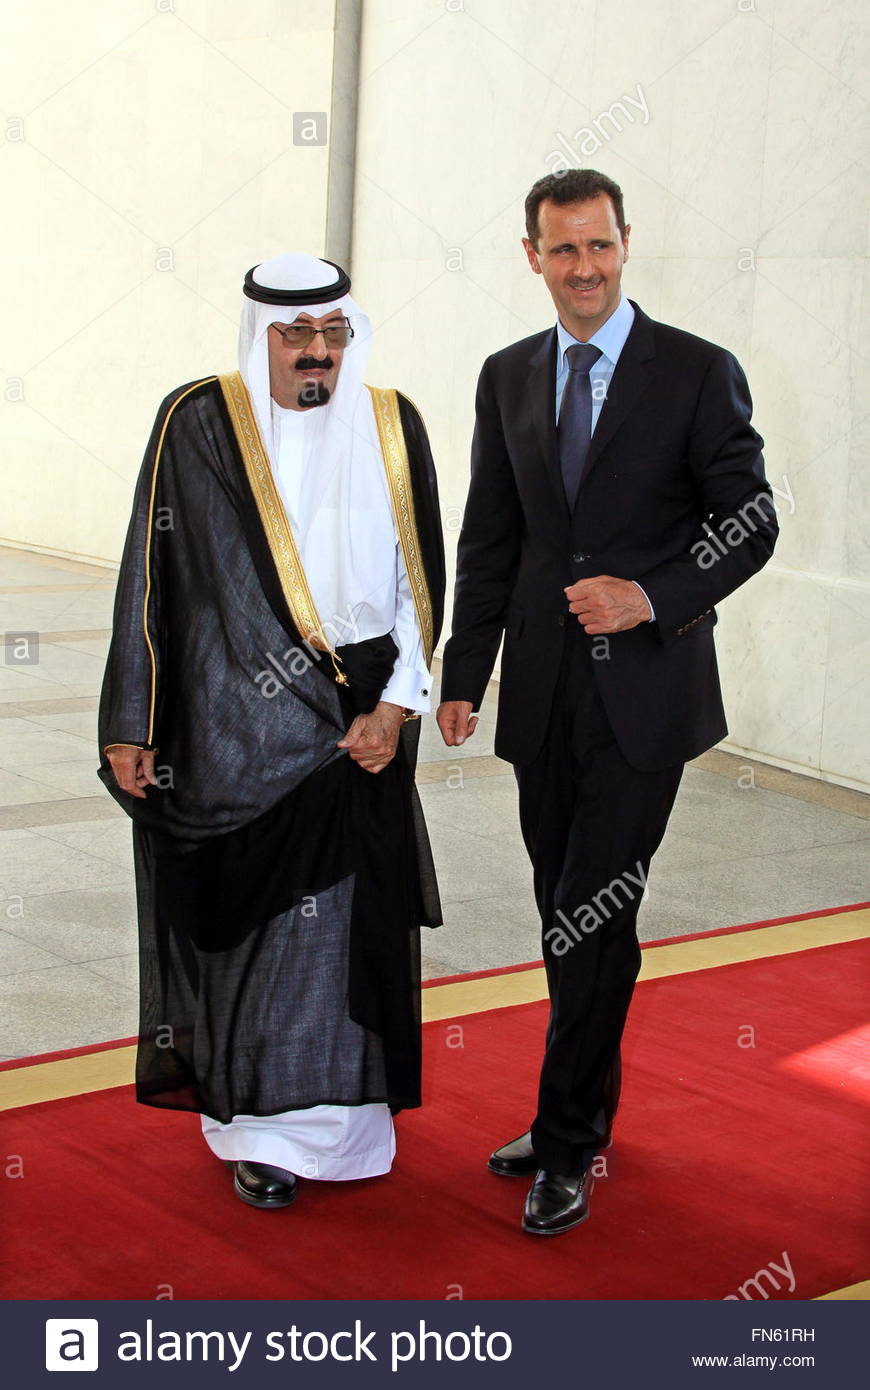 syrian-president-bashar-assad-r-walks-with-saudi-king-abdullah-bin-FN61RH.jpg